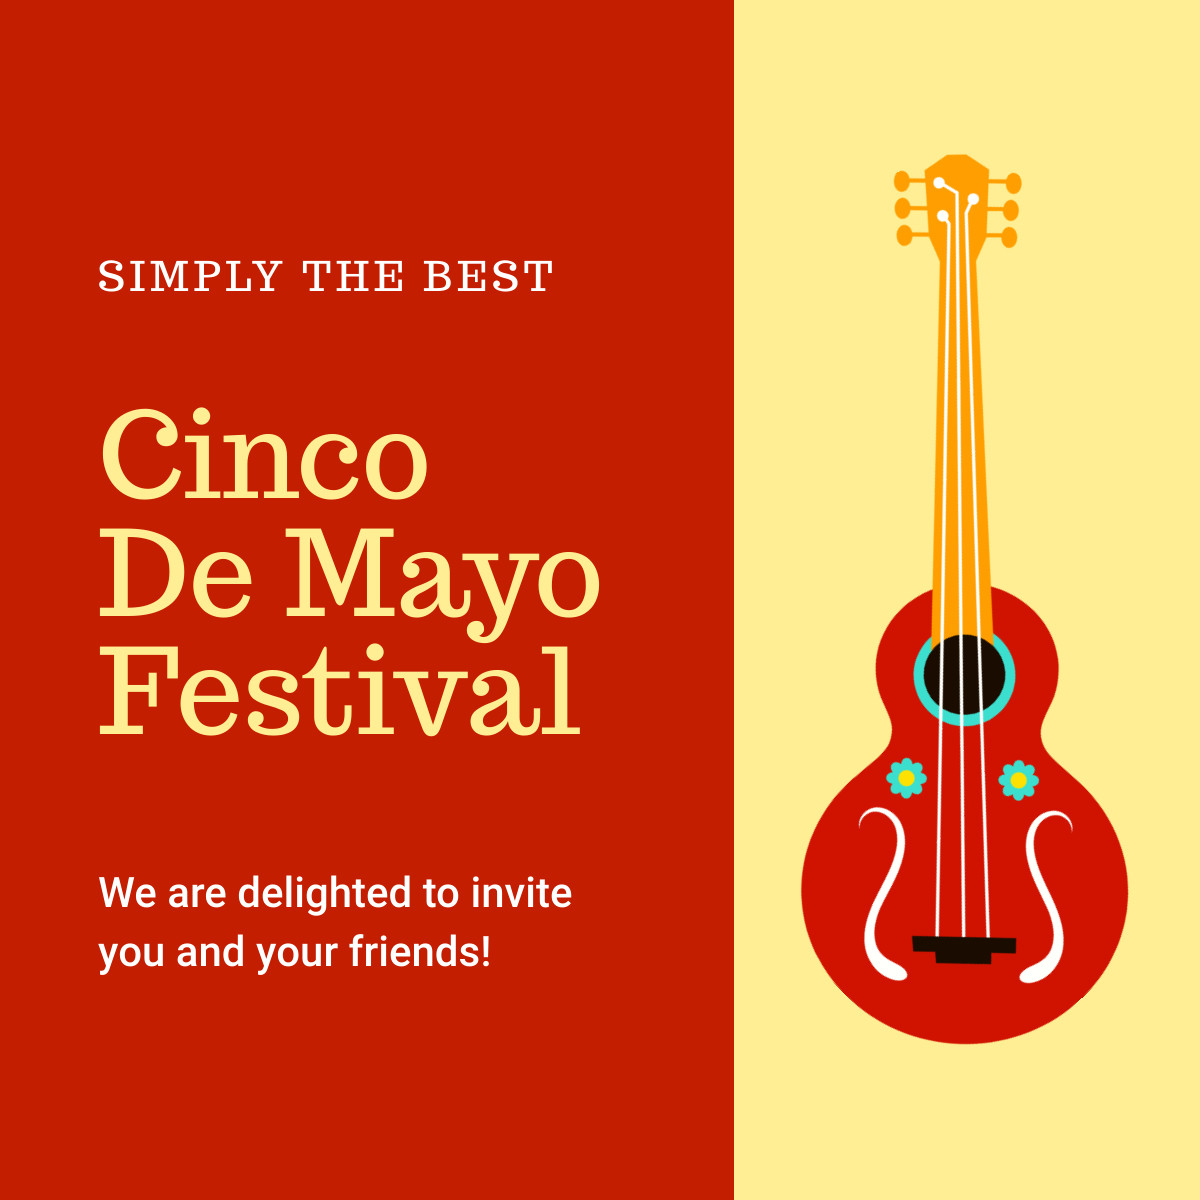 Best Cinco de Mayo Festival Responsive Square Art 1200x1200